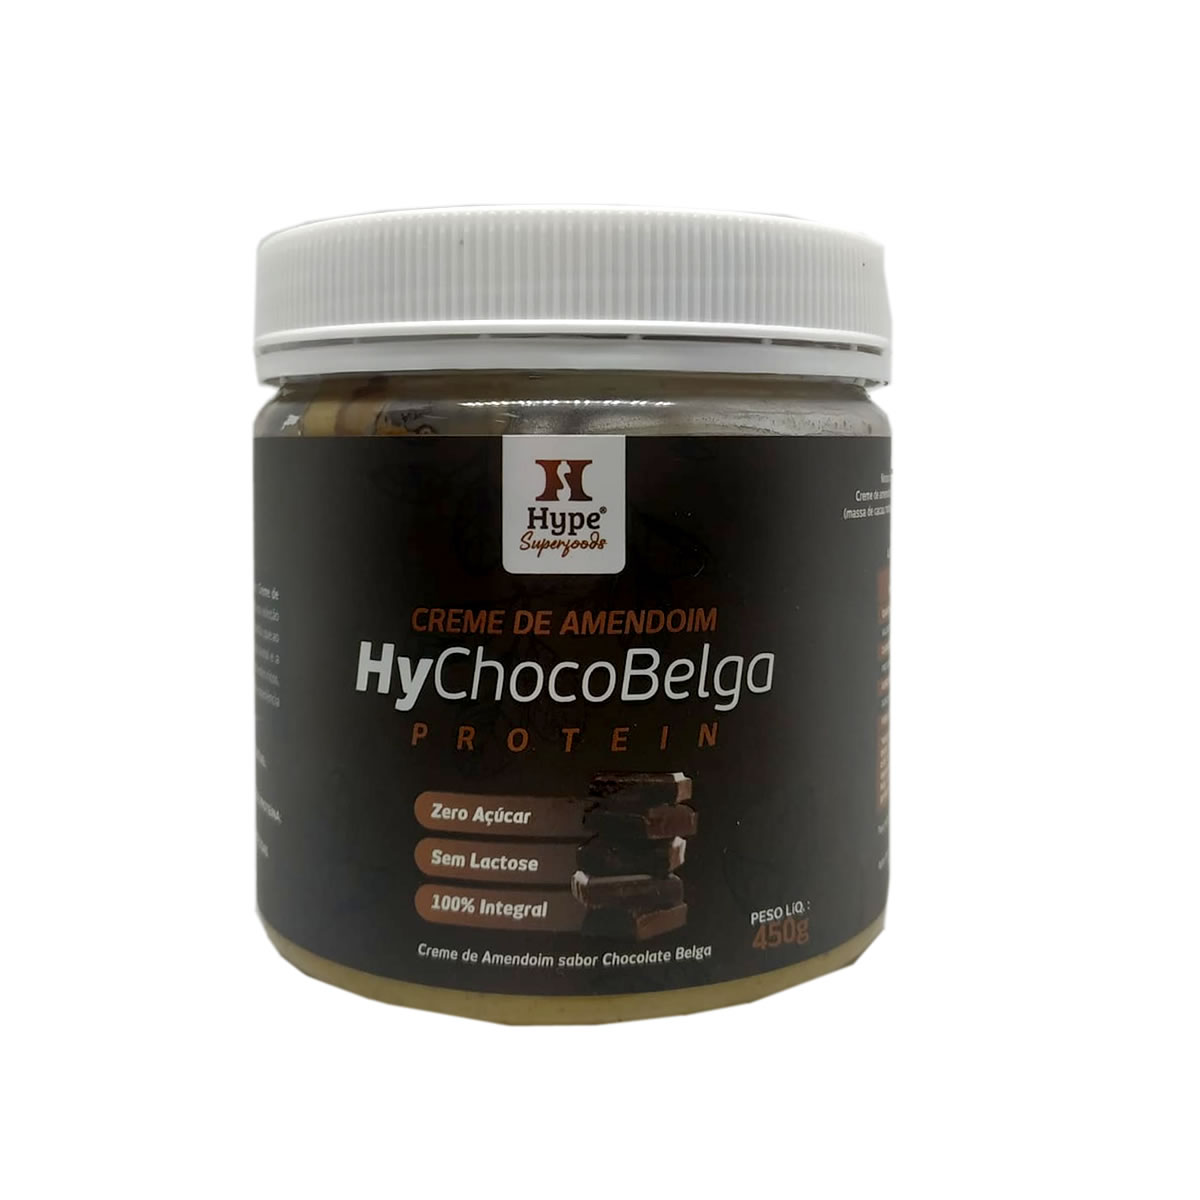 Creme de Amendoim Hychocobelga Protein 450g - Hype